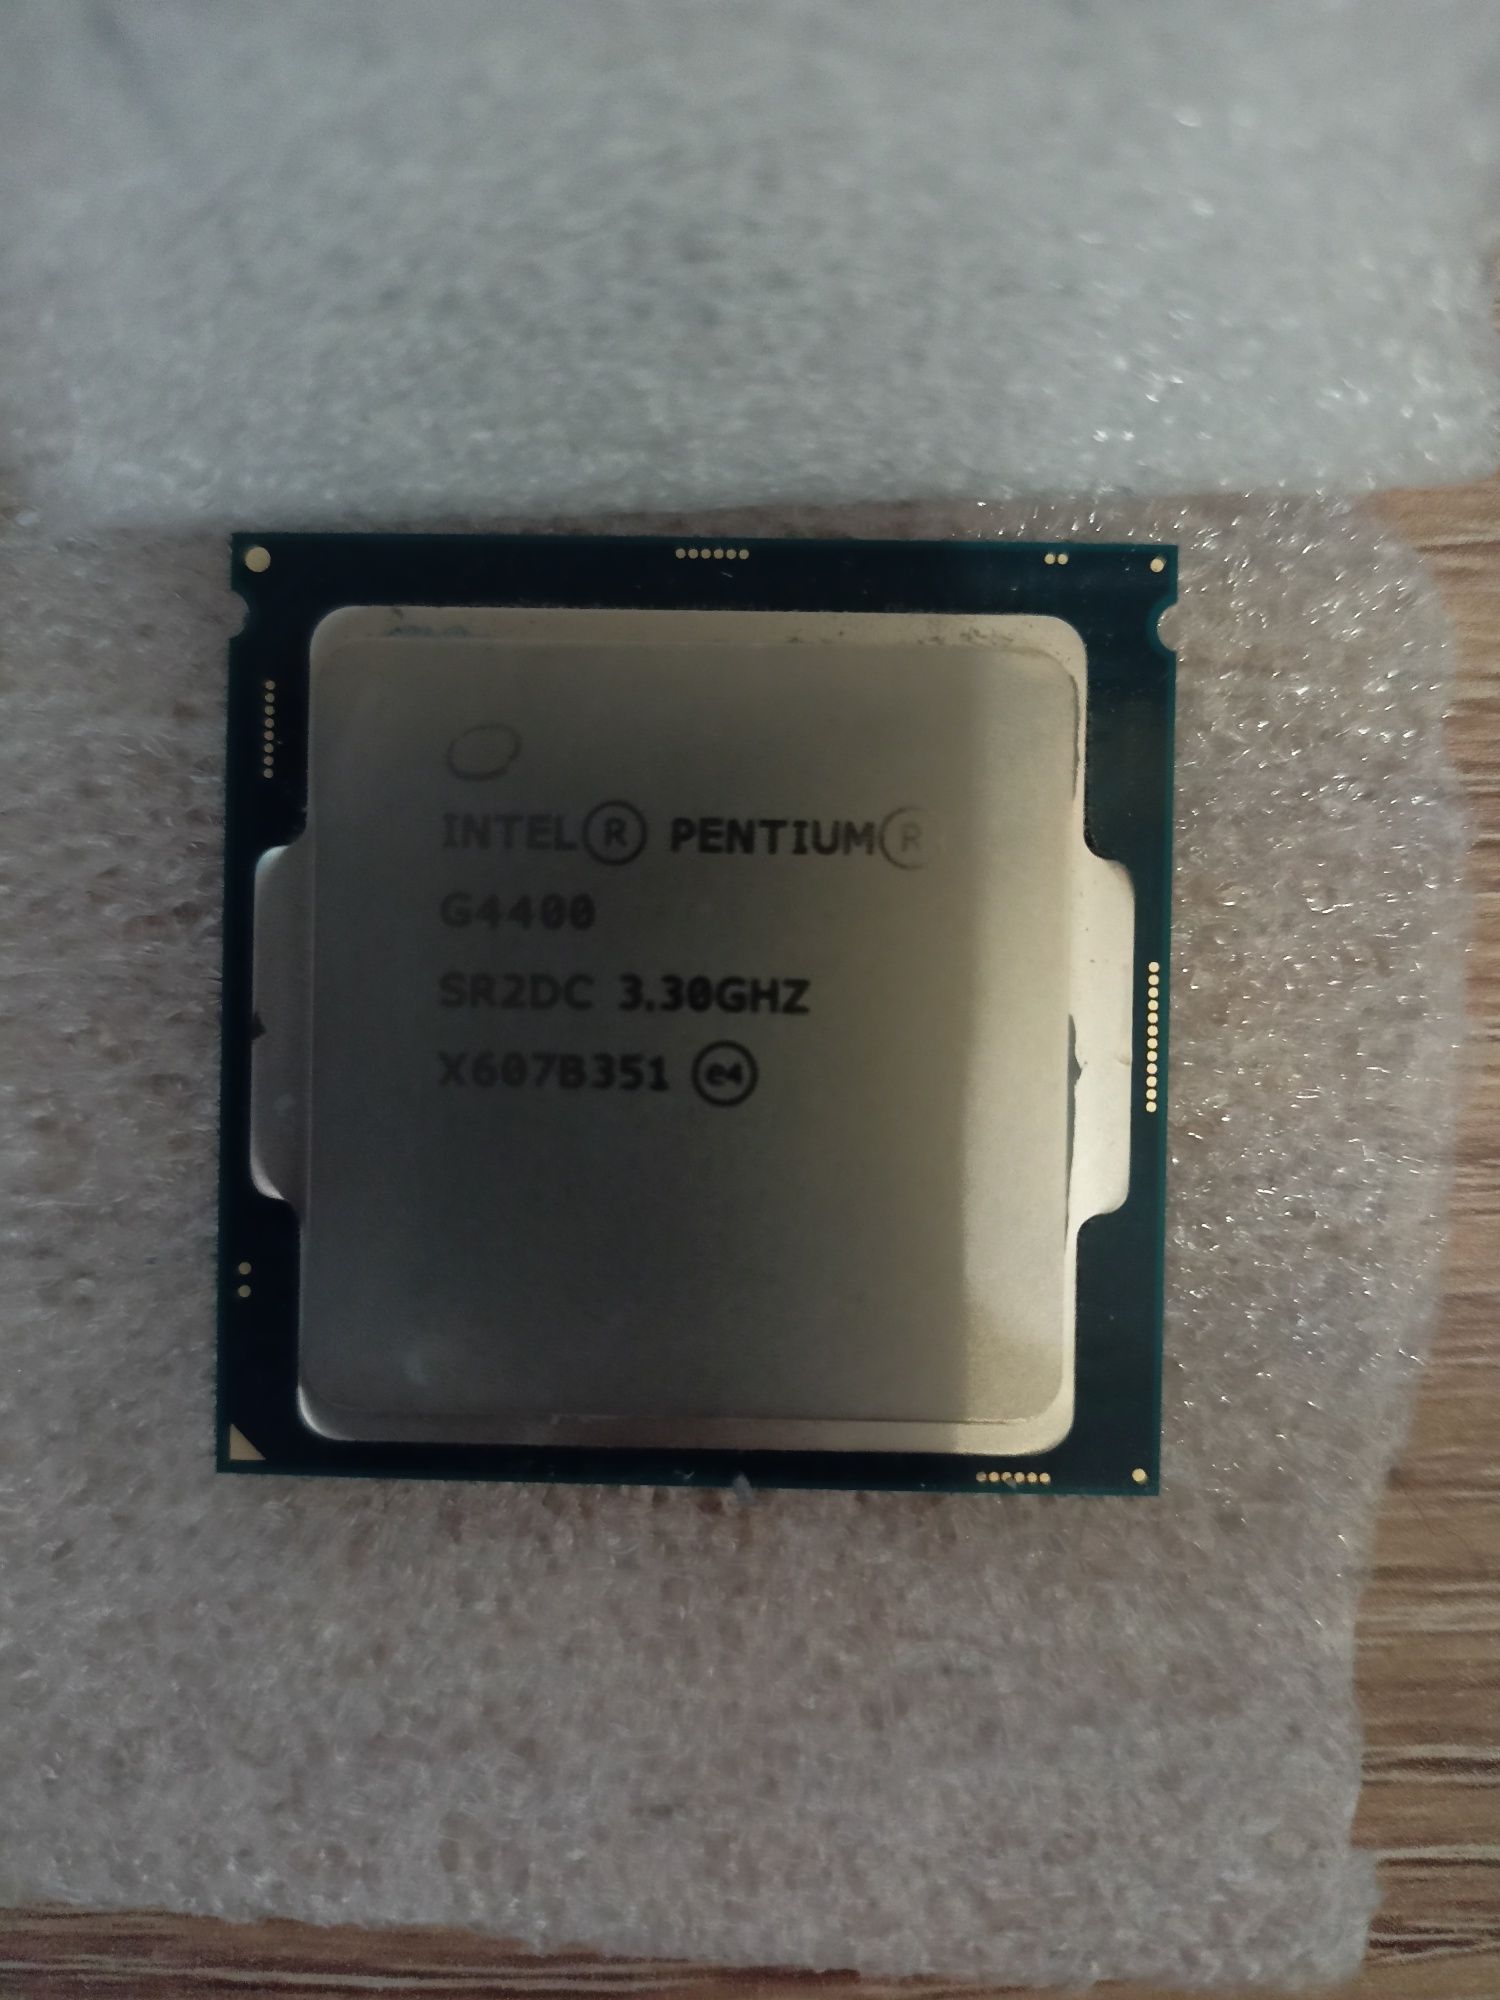 Procesor Intel Pentium G4400 lga1151 + chłodzenie